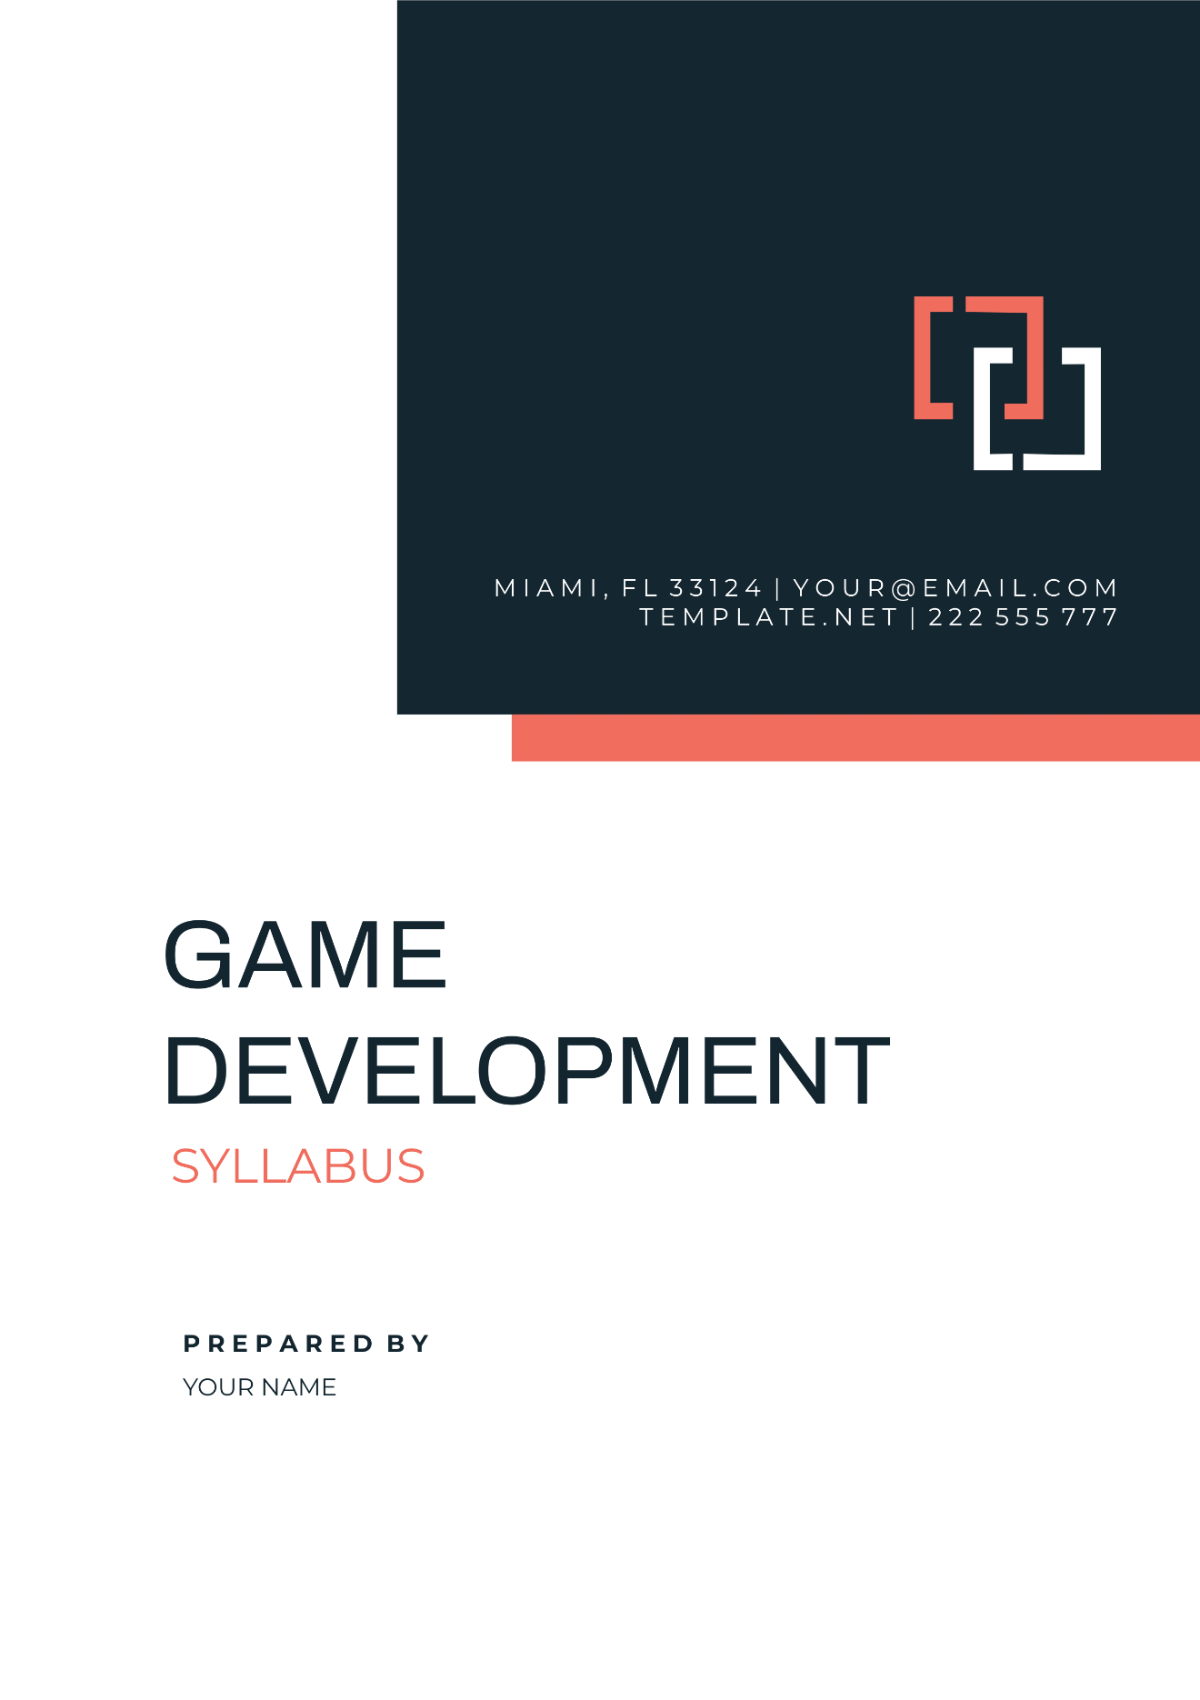 Game Development Syllabus Template